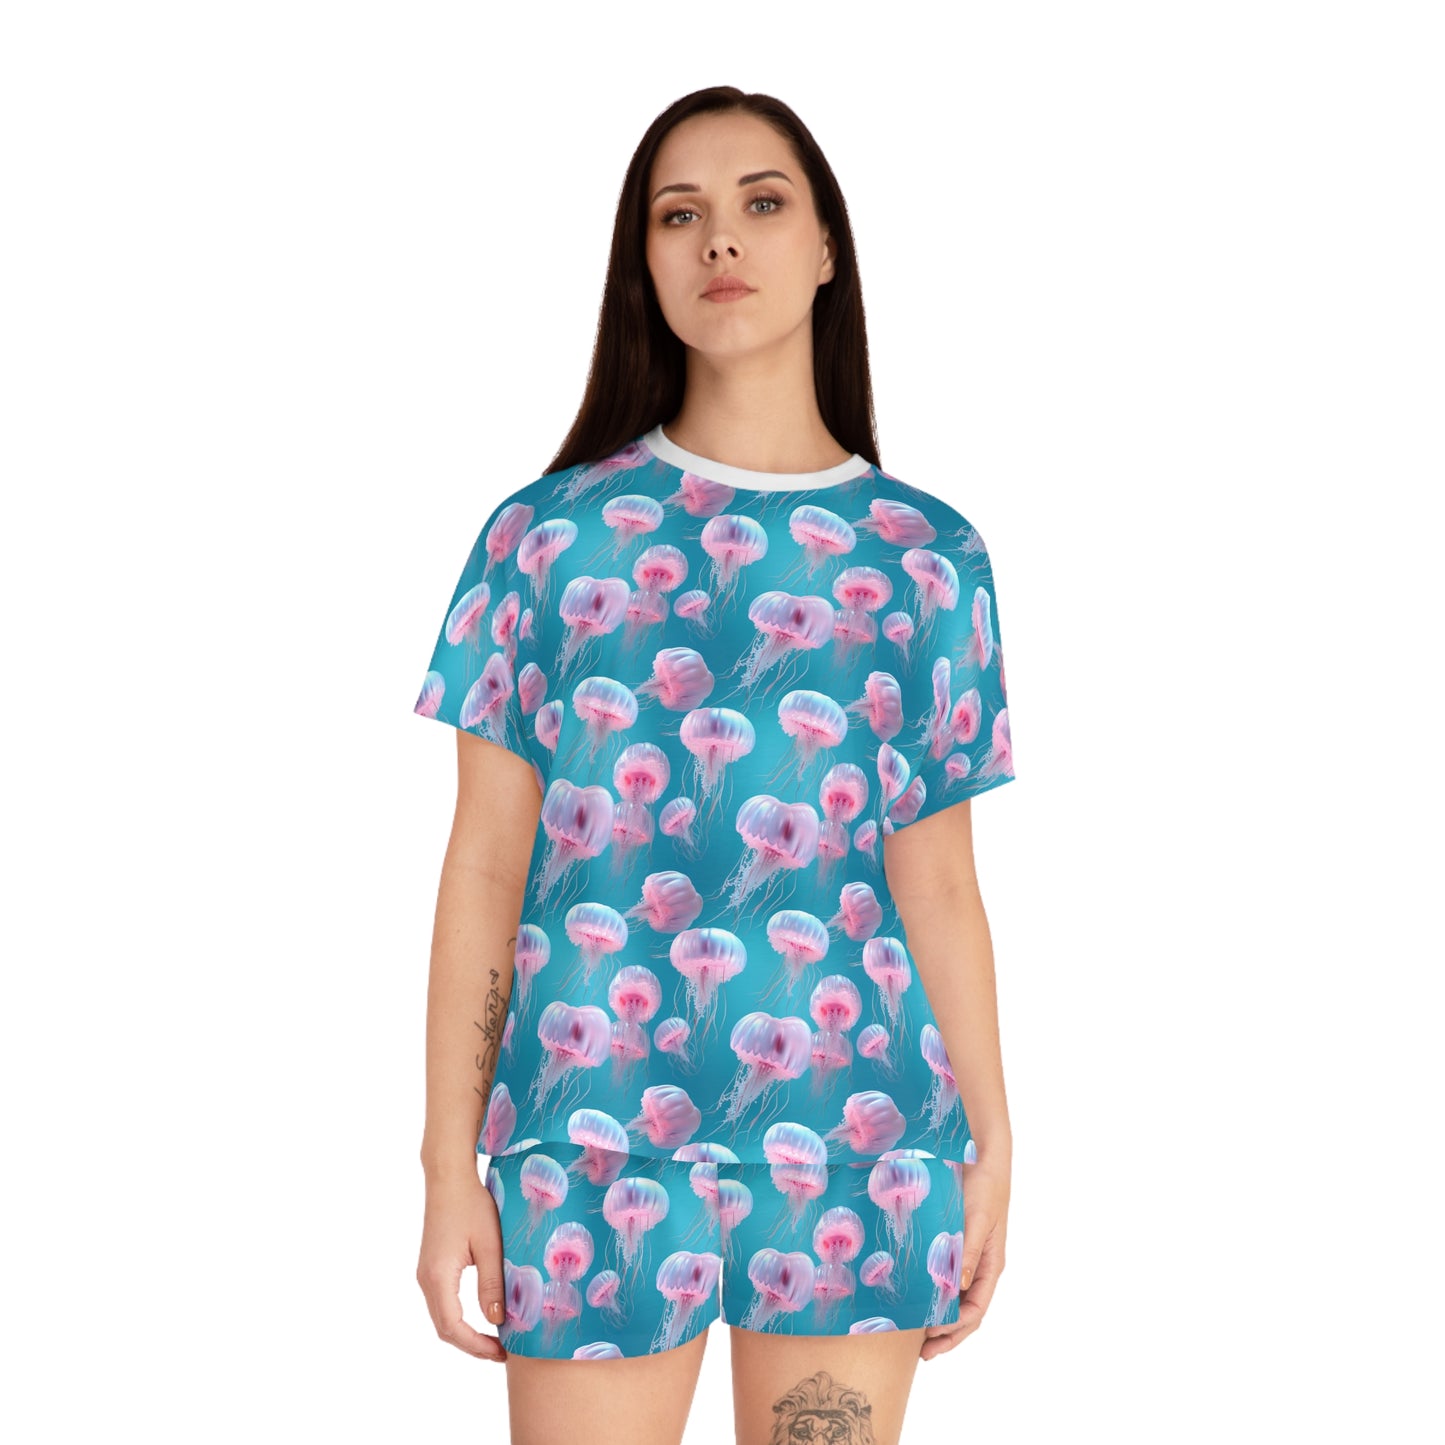 “Get That Jelly” Women's Short Pajama Set